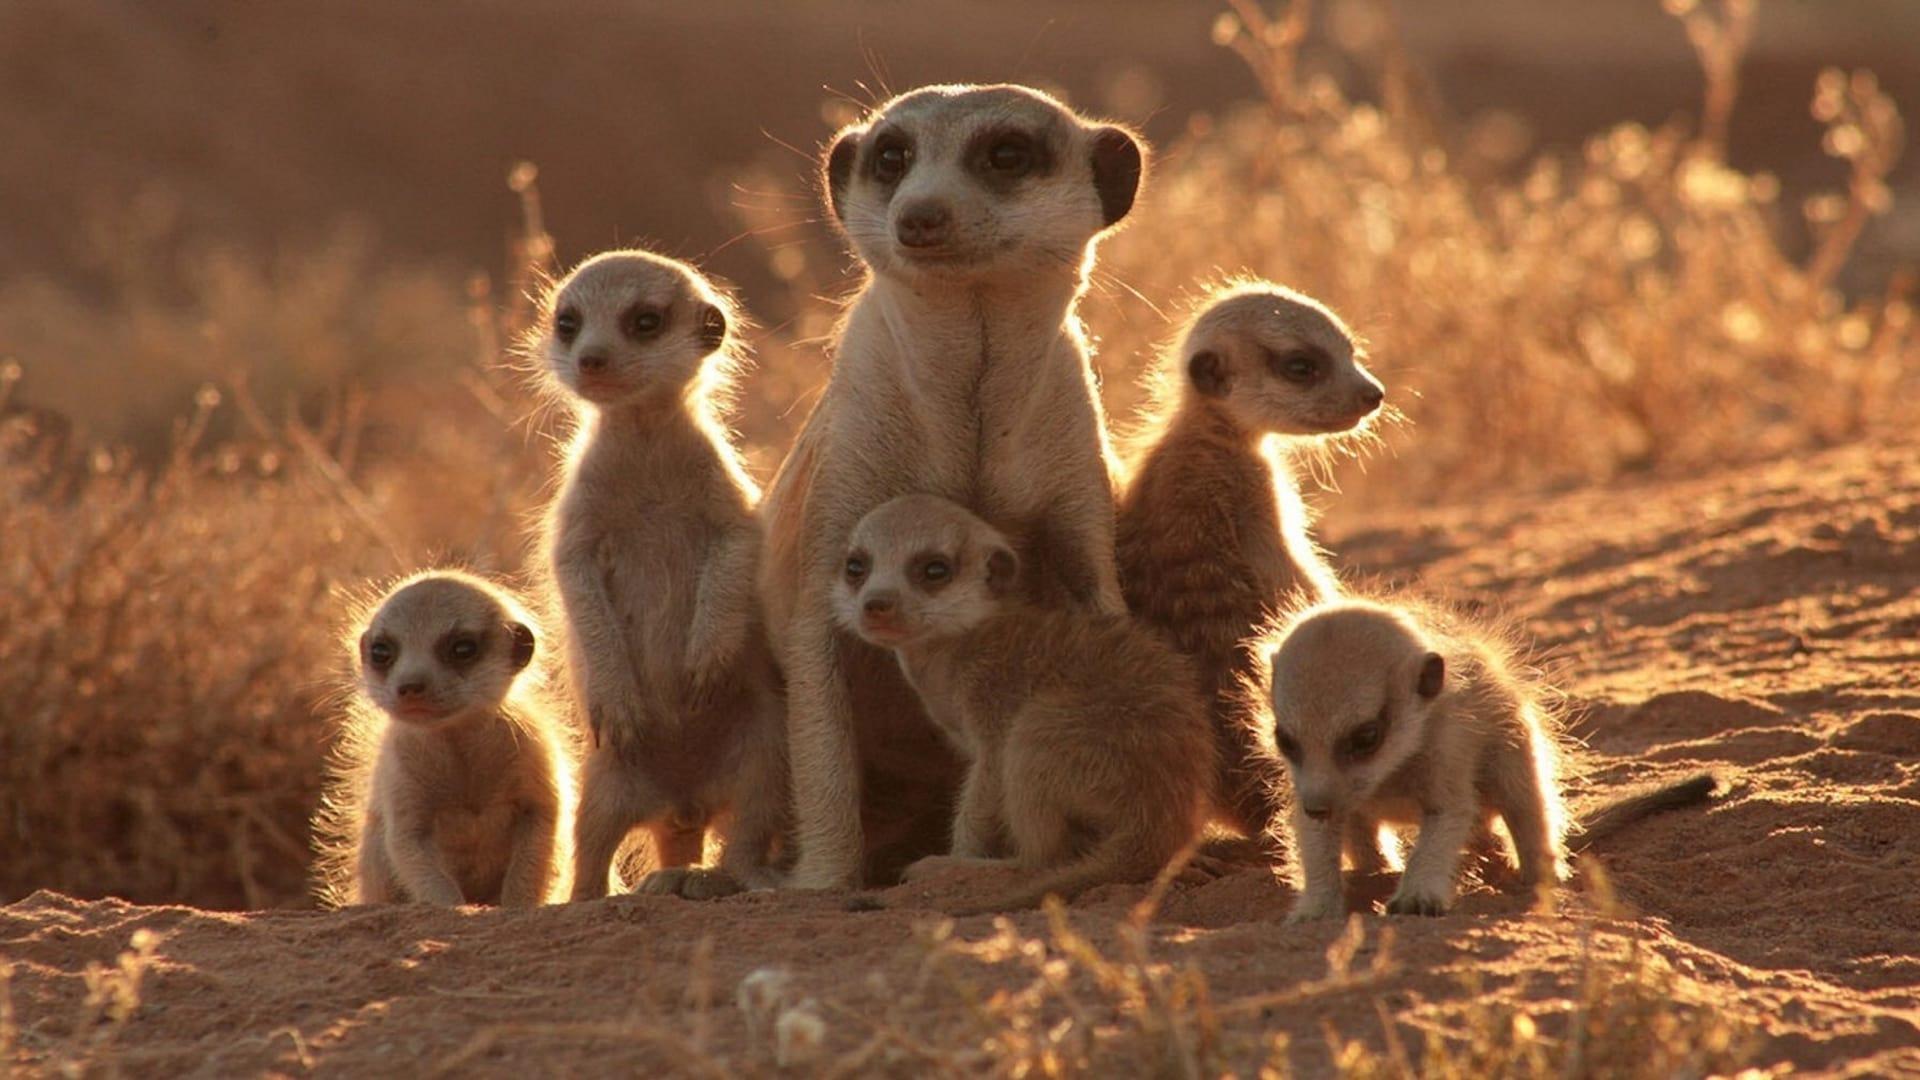 The Meerkats backdrop